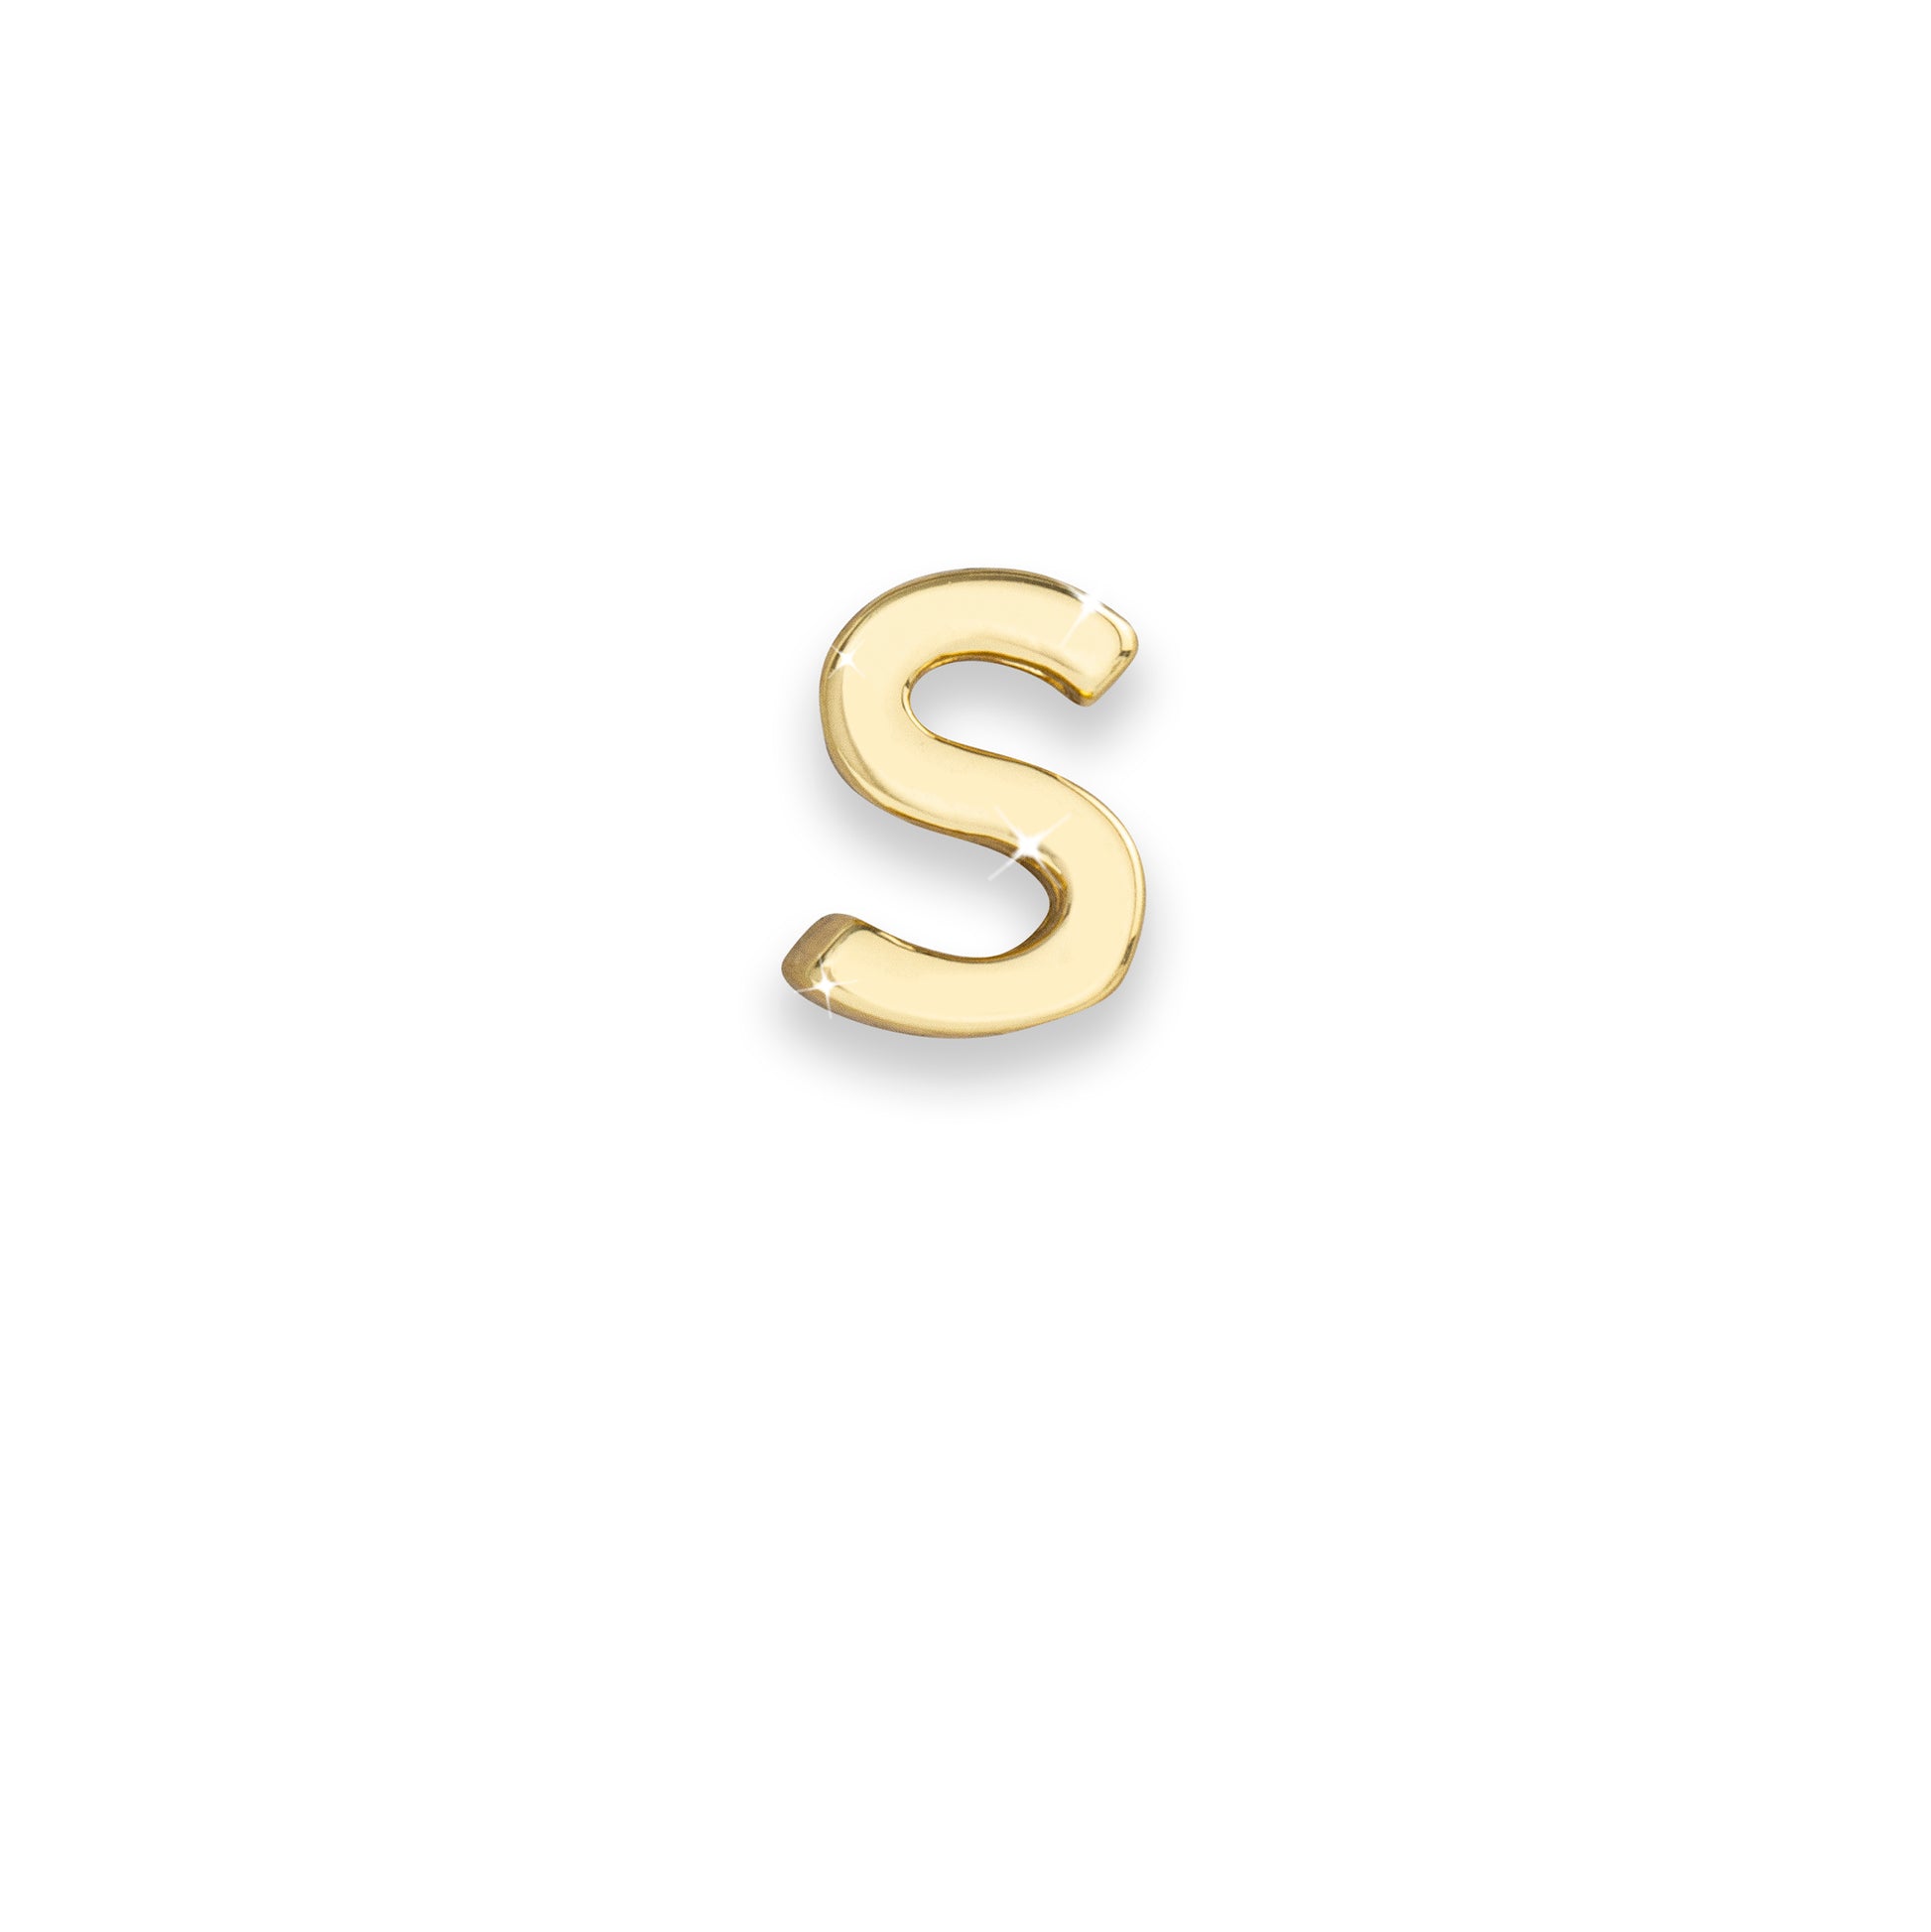 Gold letter S monogram charm for necklaces & bracelets